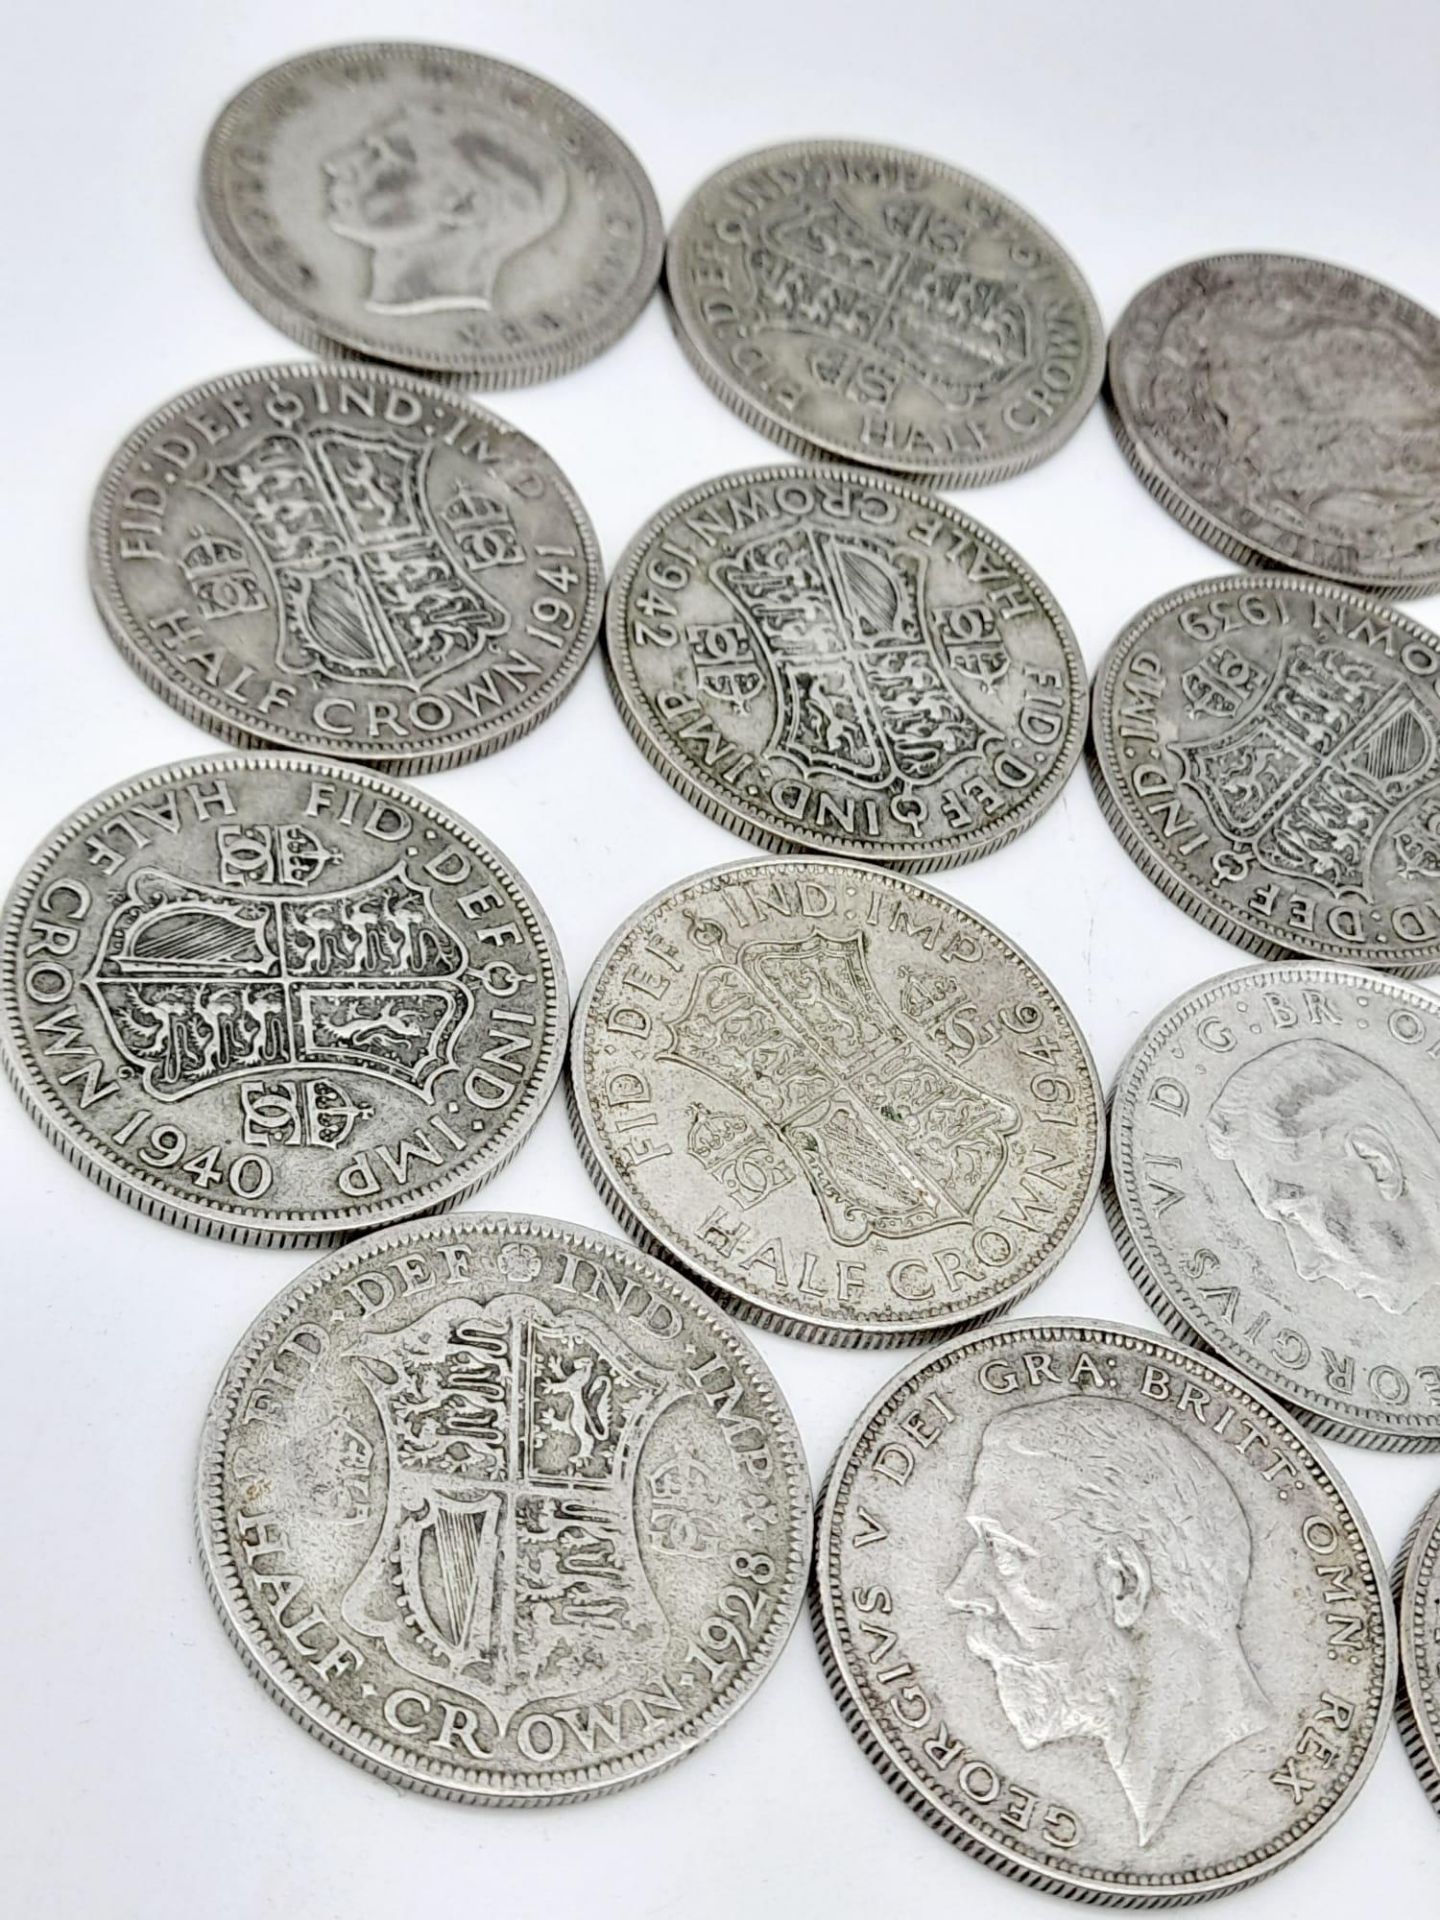 19 Pre 1947 British Silver Half Crown Coins. 265g total weight.